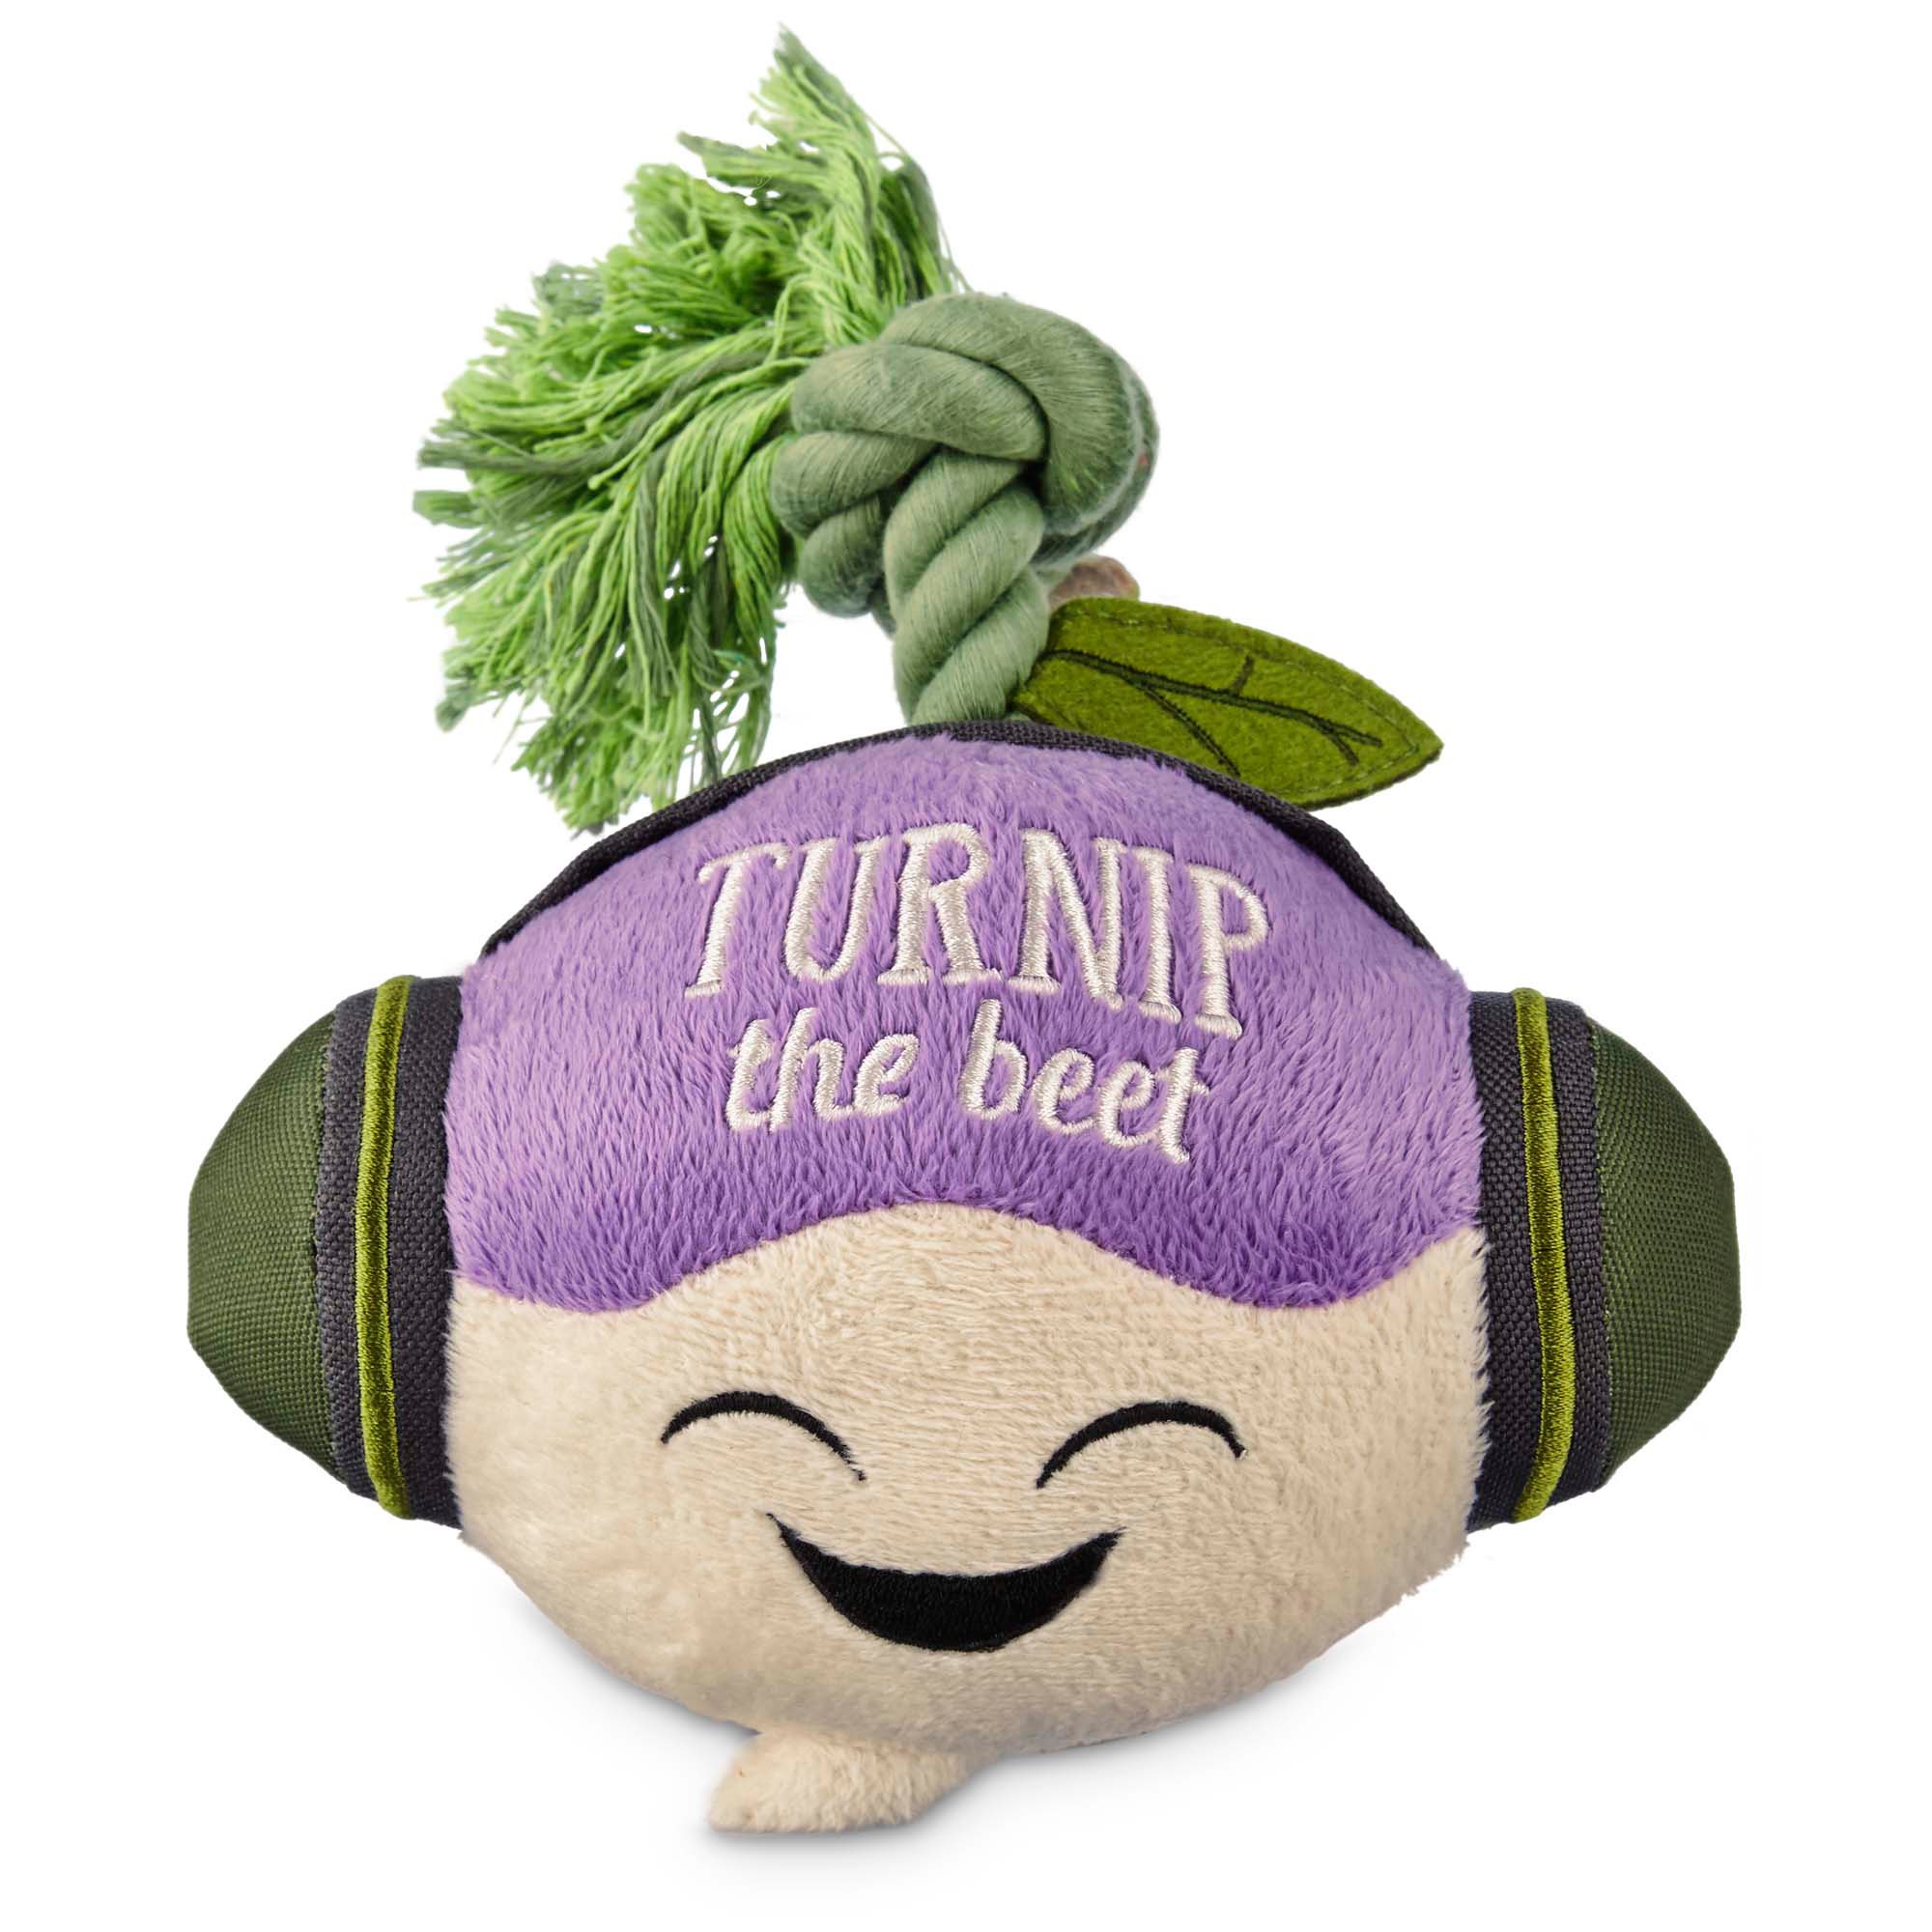 turnip plush